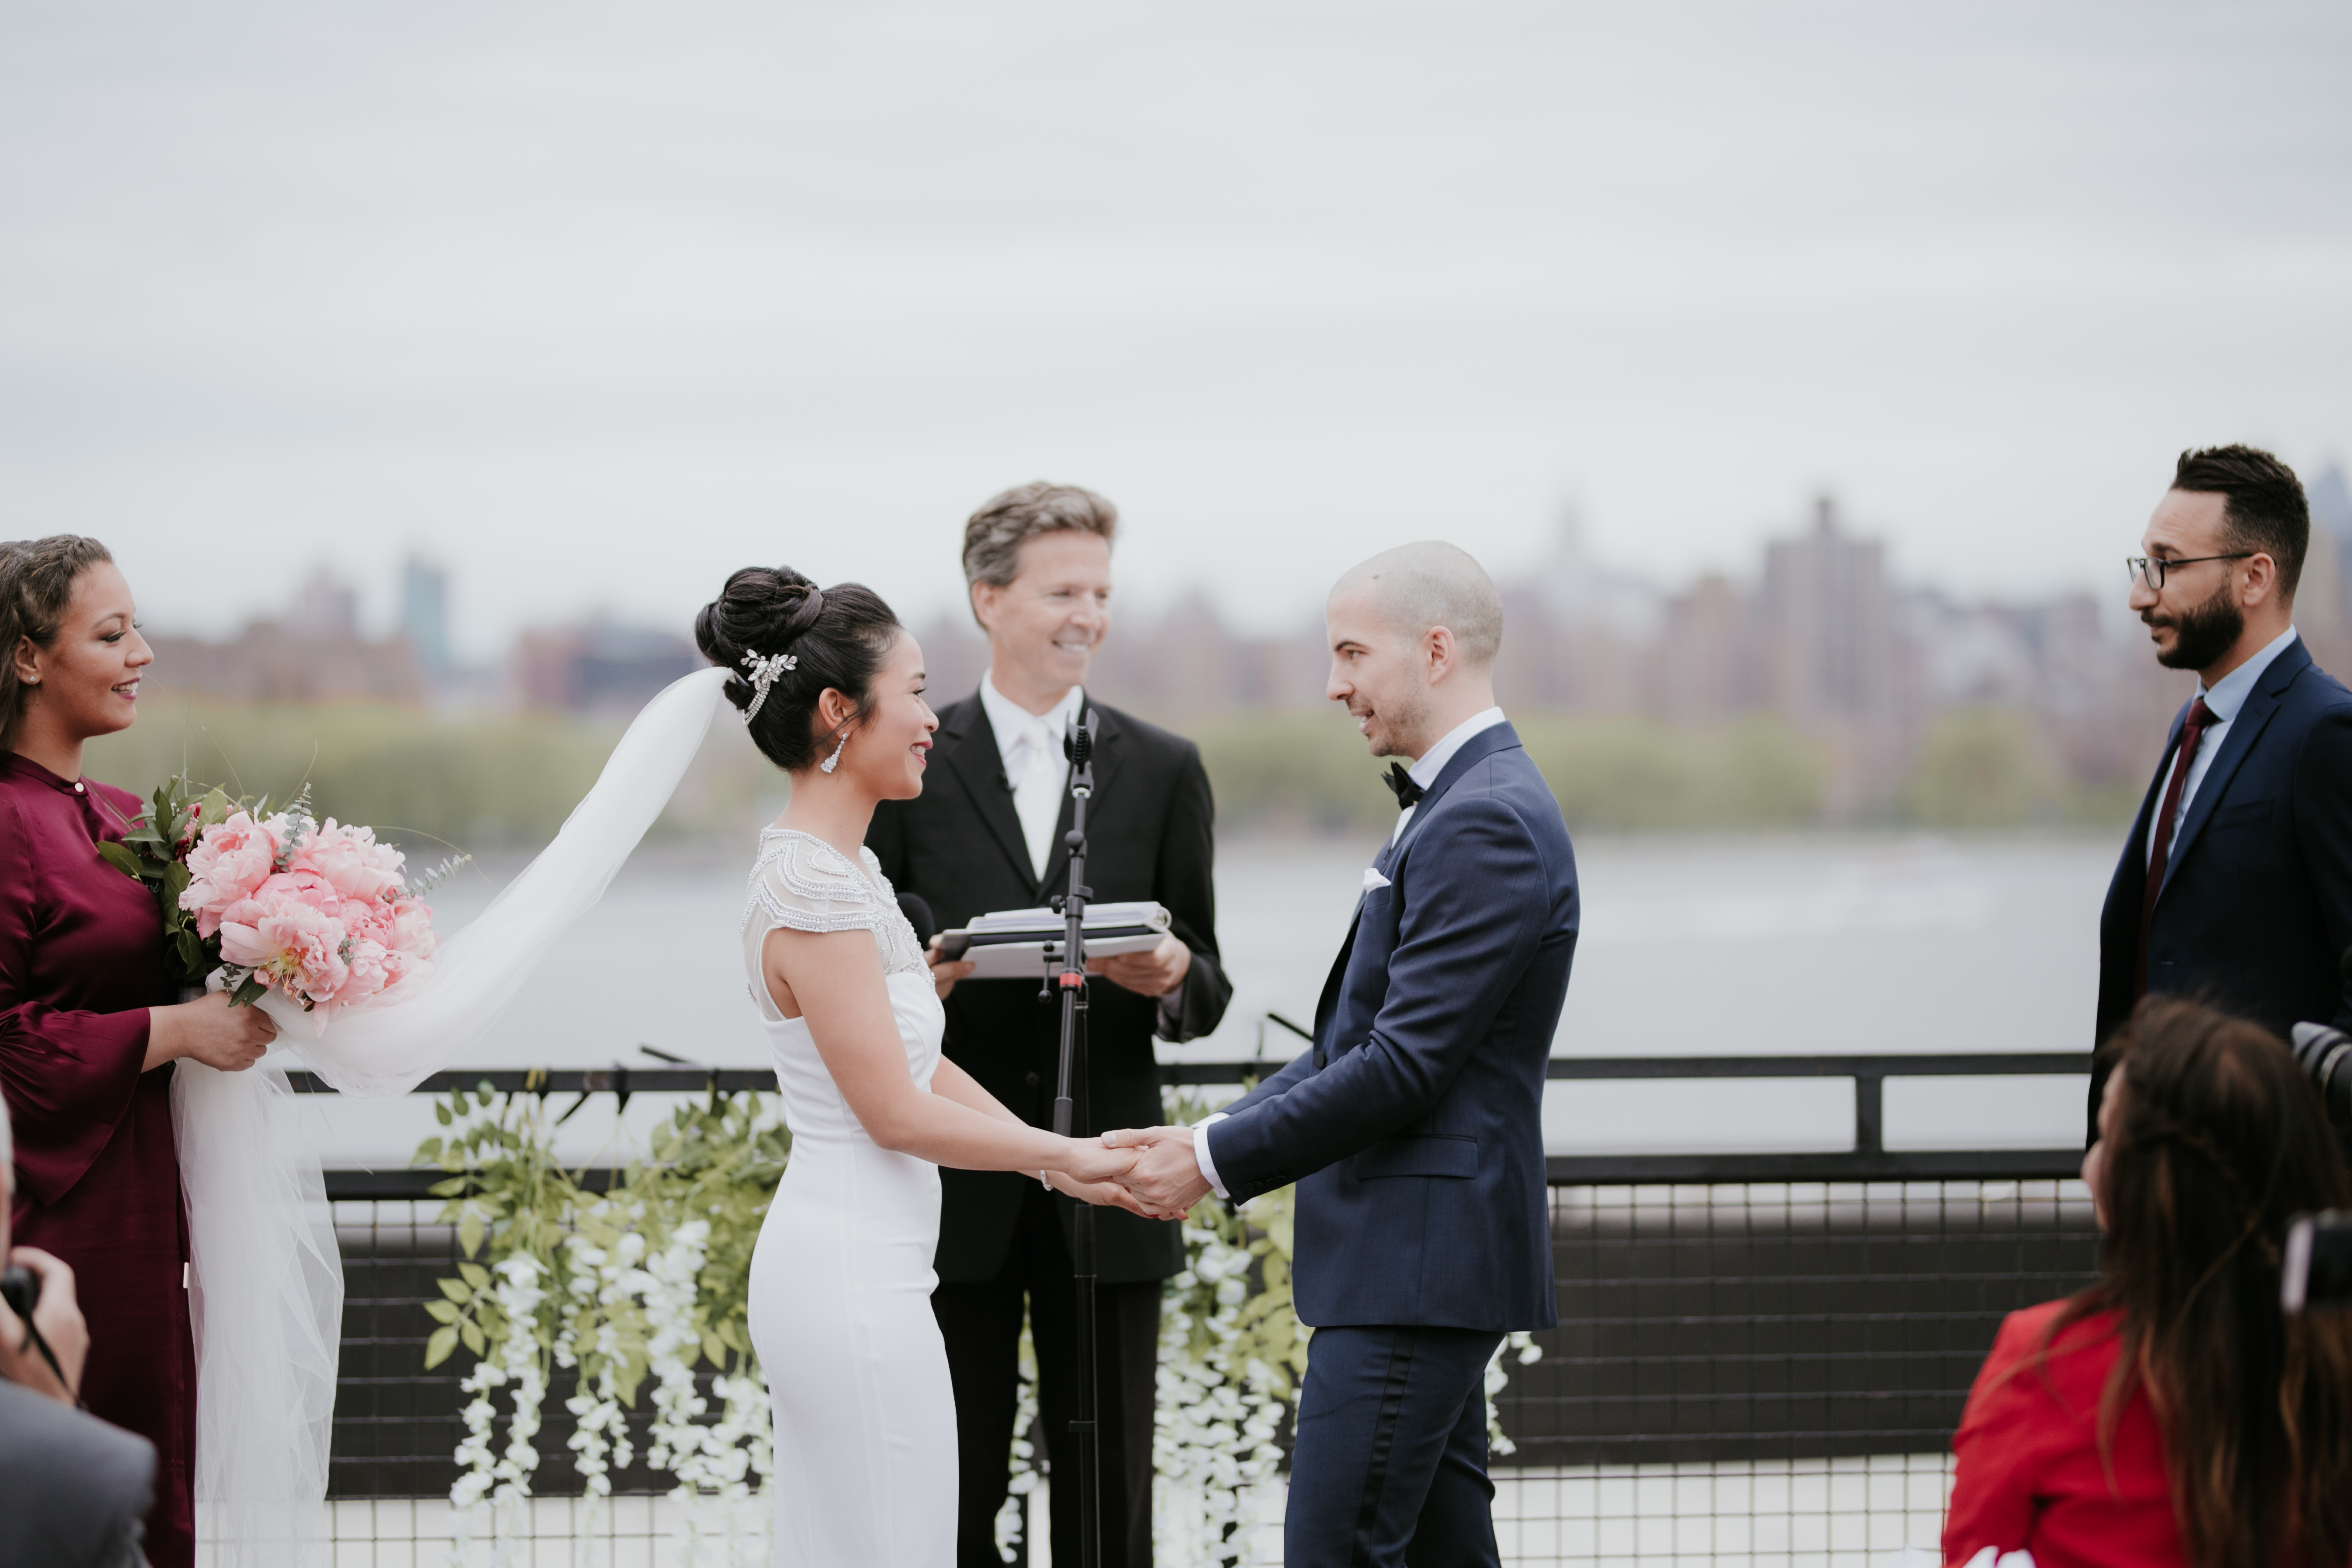 05 06 18 Elodie and Bertrand Wedding 167 - Wedding Video Sweepstakes Winners Wed at The W Loft in Brooklyn